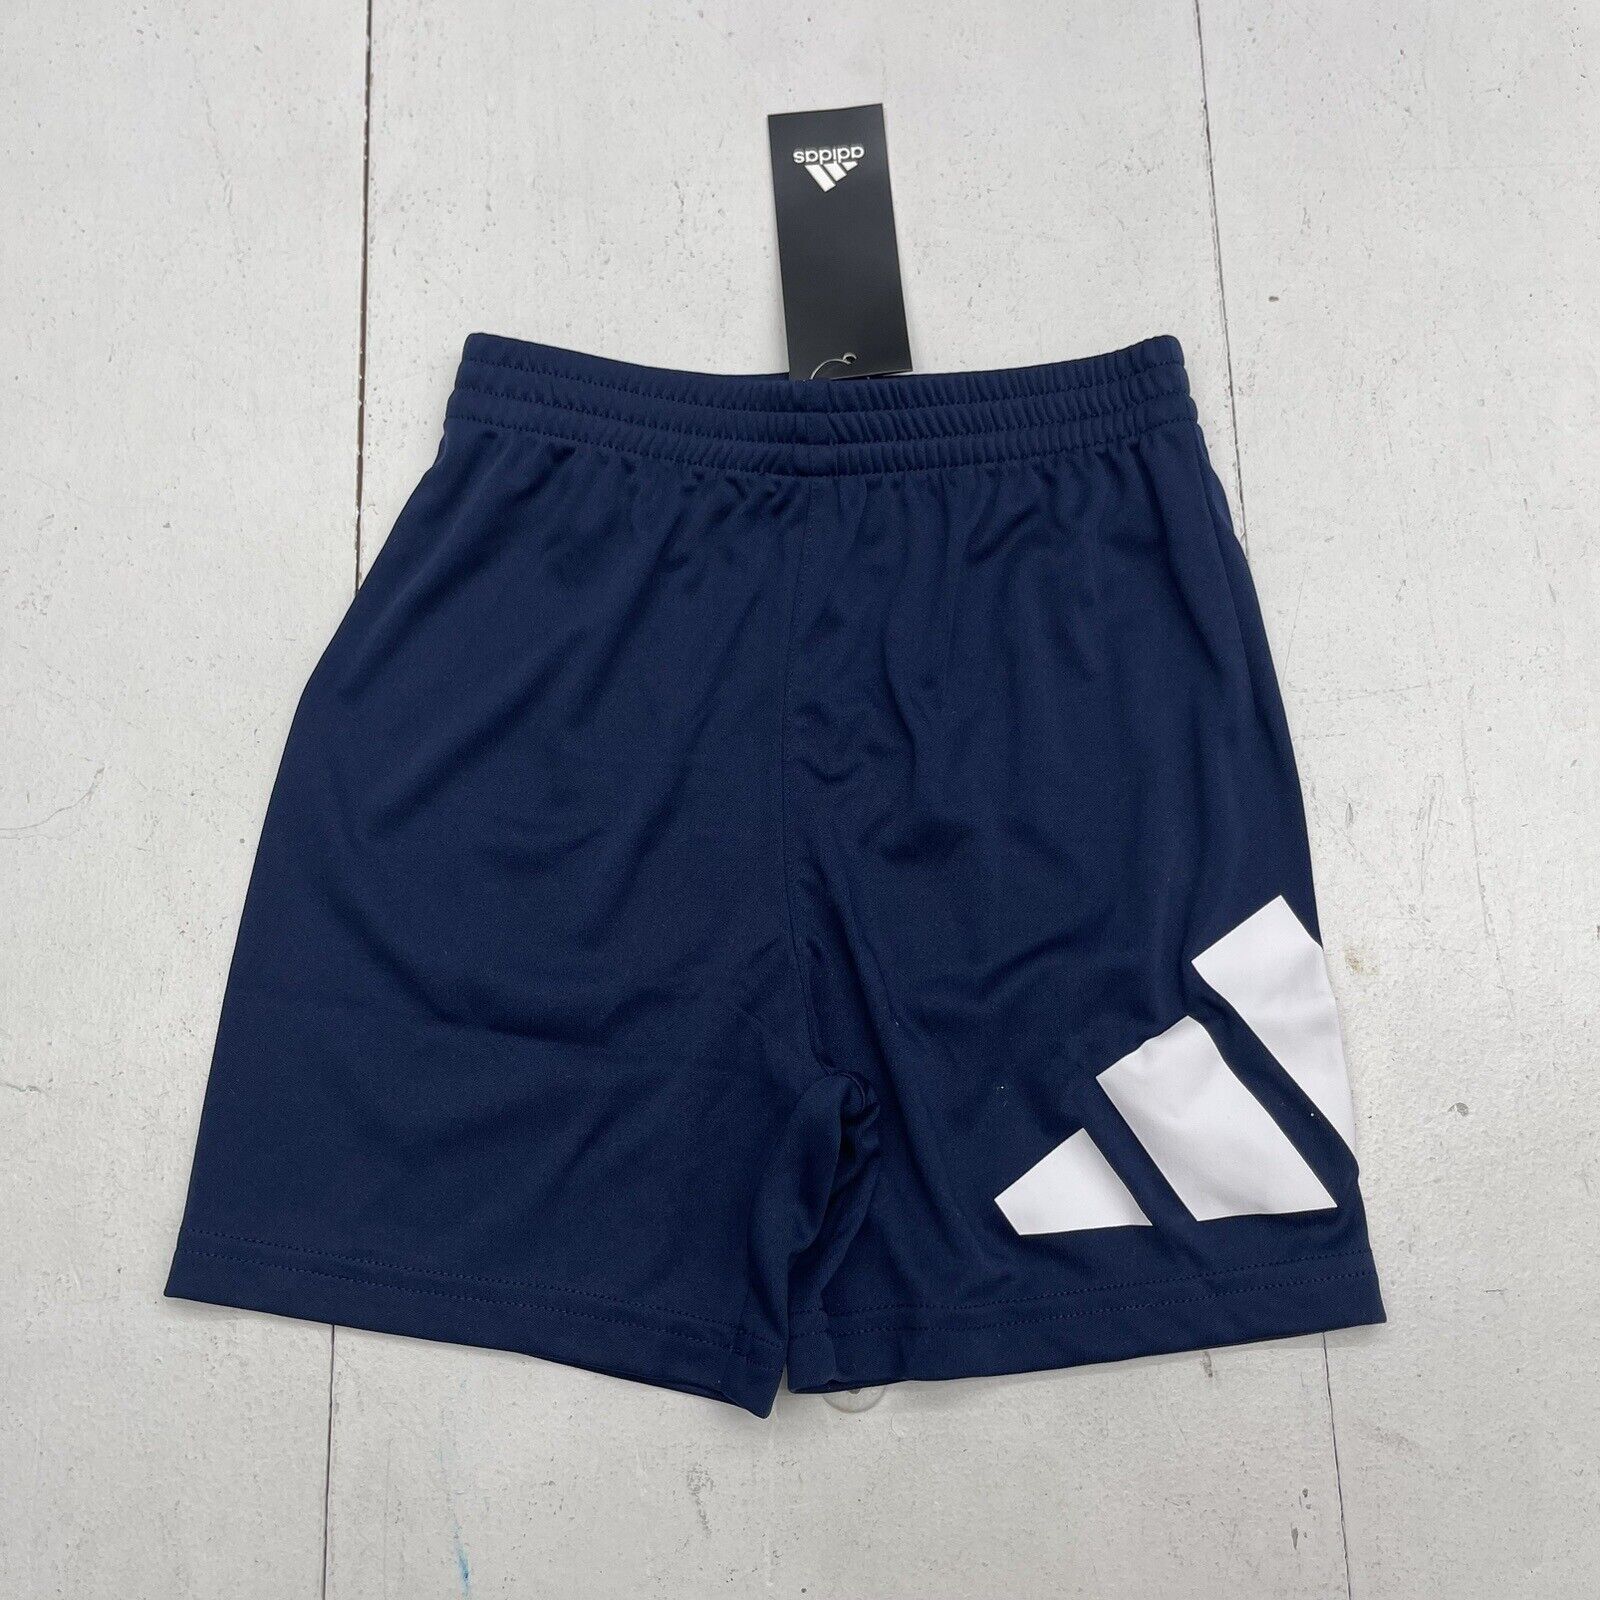 Adidas Navy Blue Performance Shorts Toddler Boys Size 4T New